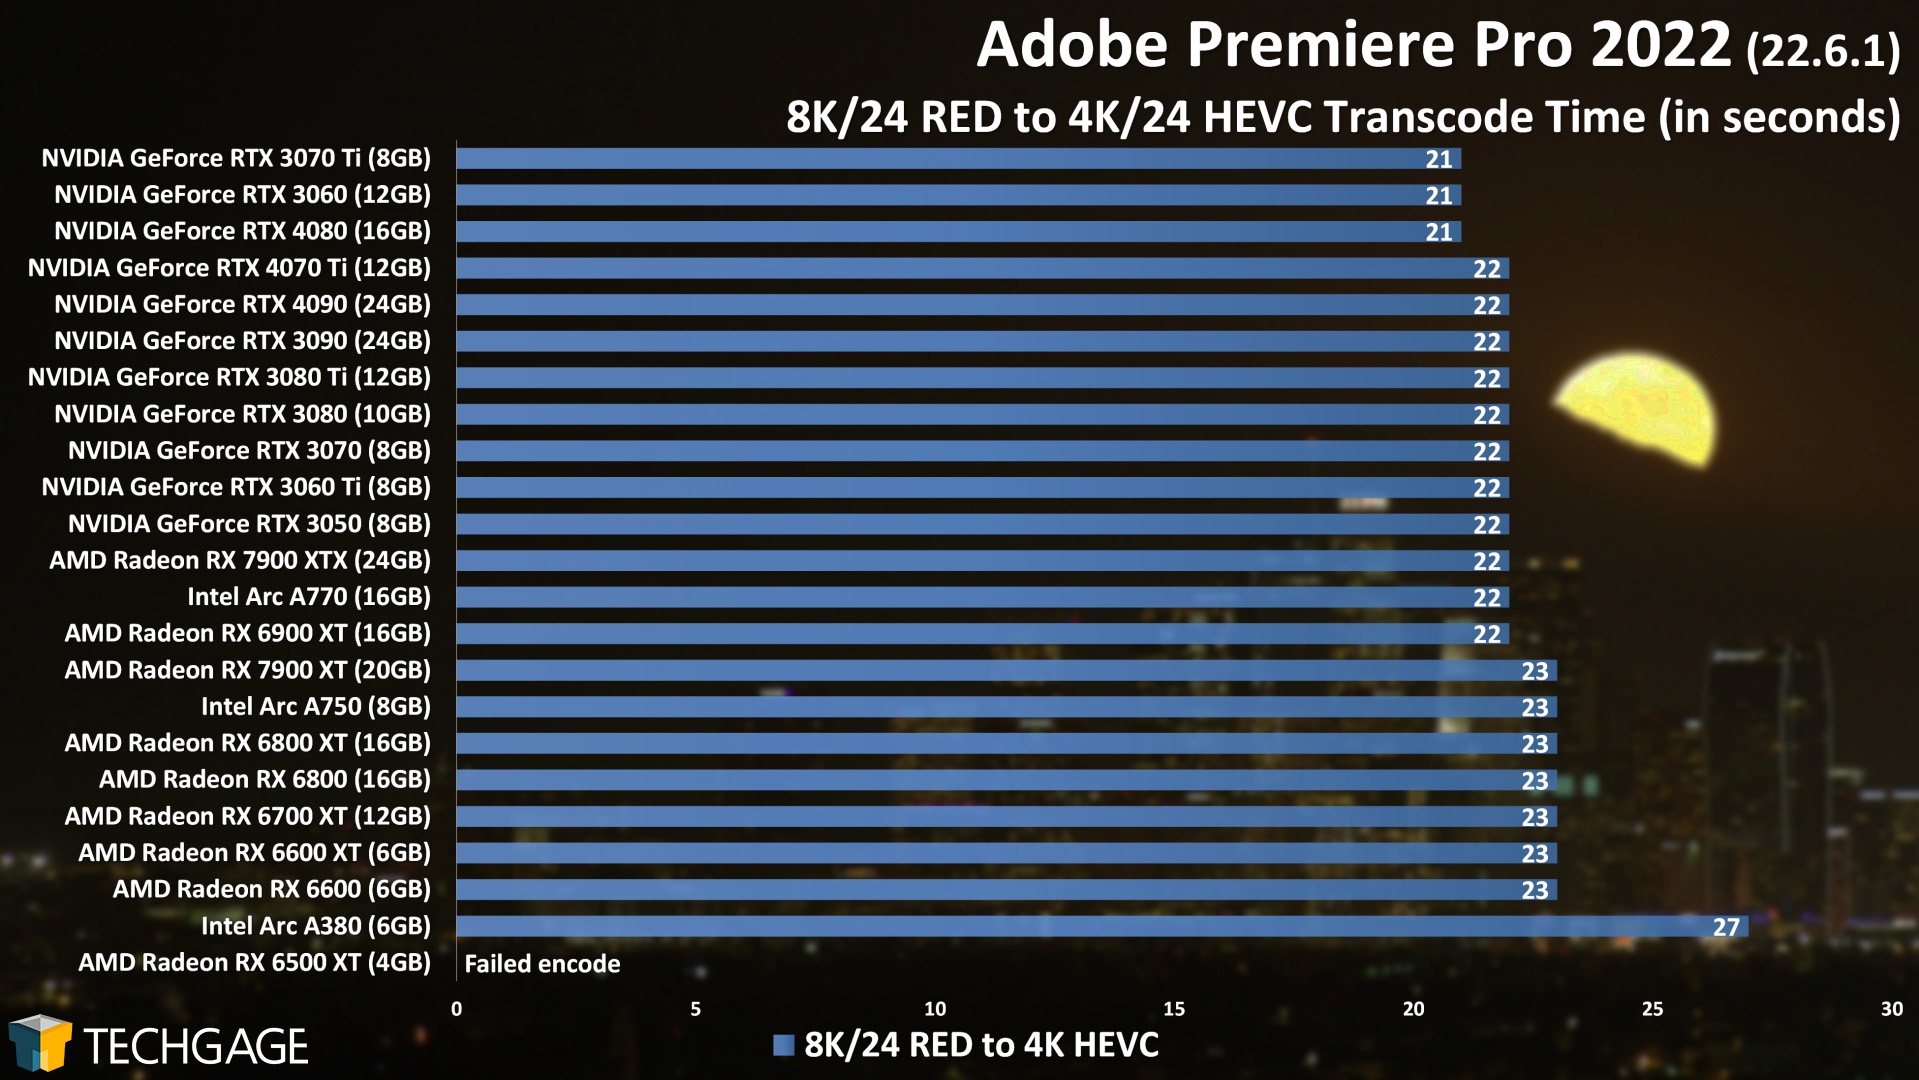 Adobe Premiere Pro - GPU Encoding Performance (8K24 RED to 4K24 HEVC)